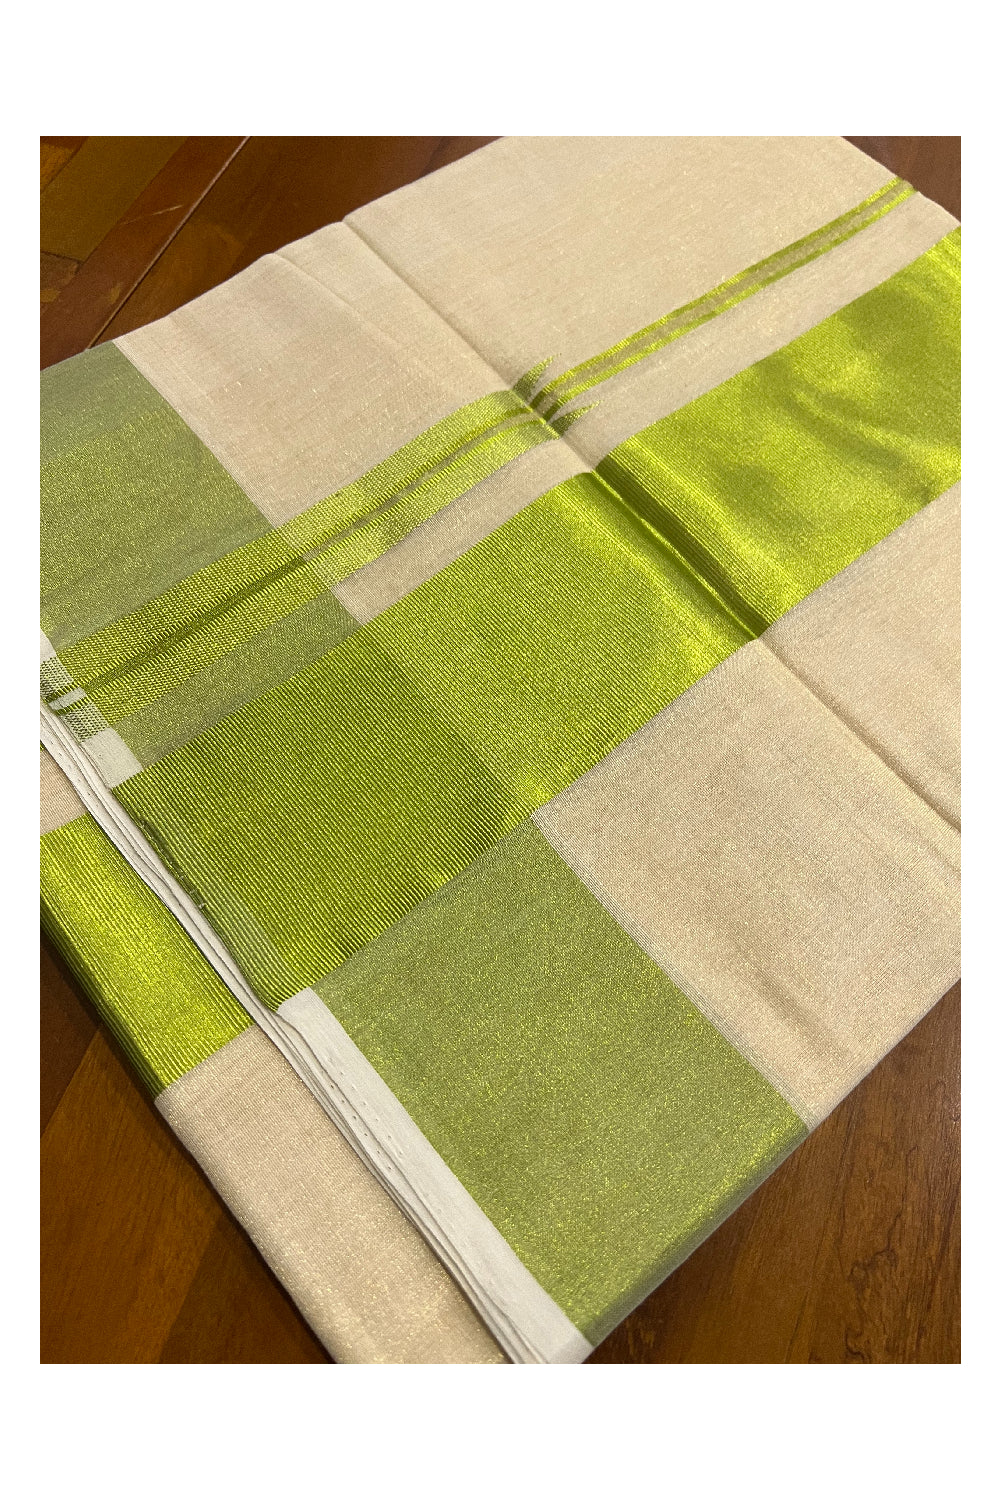 Southloom Exclusive Premium Handloom Tissue Saree with Light Green Kasavu Borders and Kara